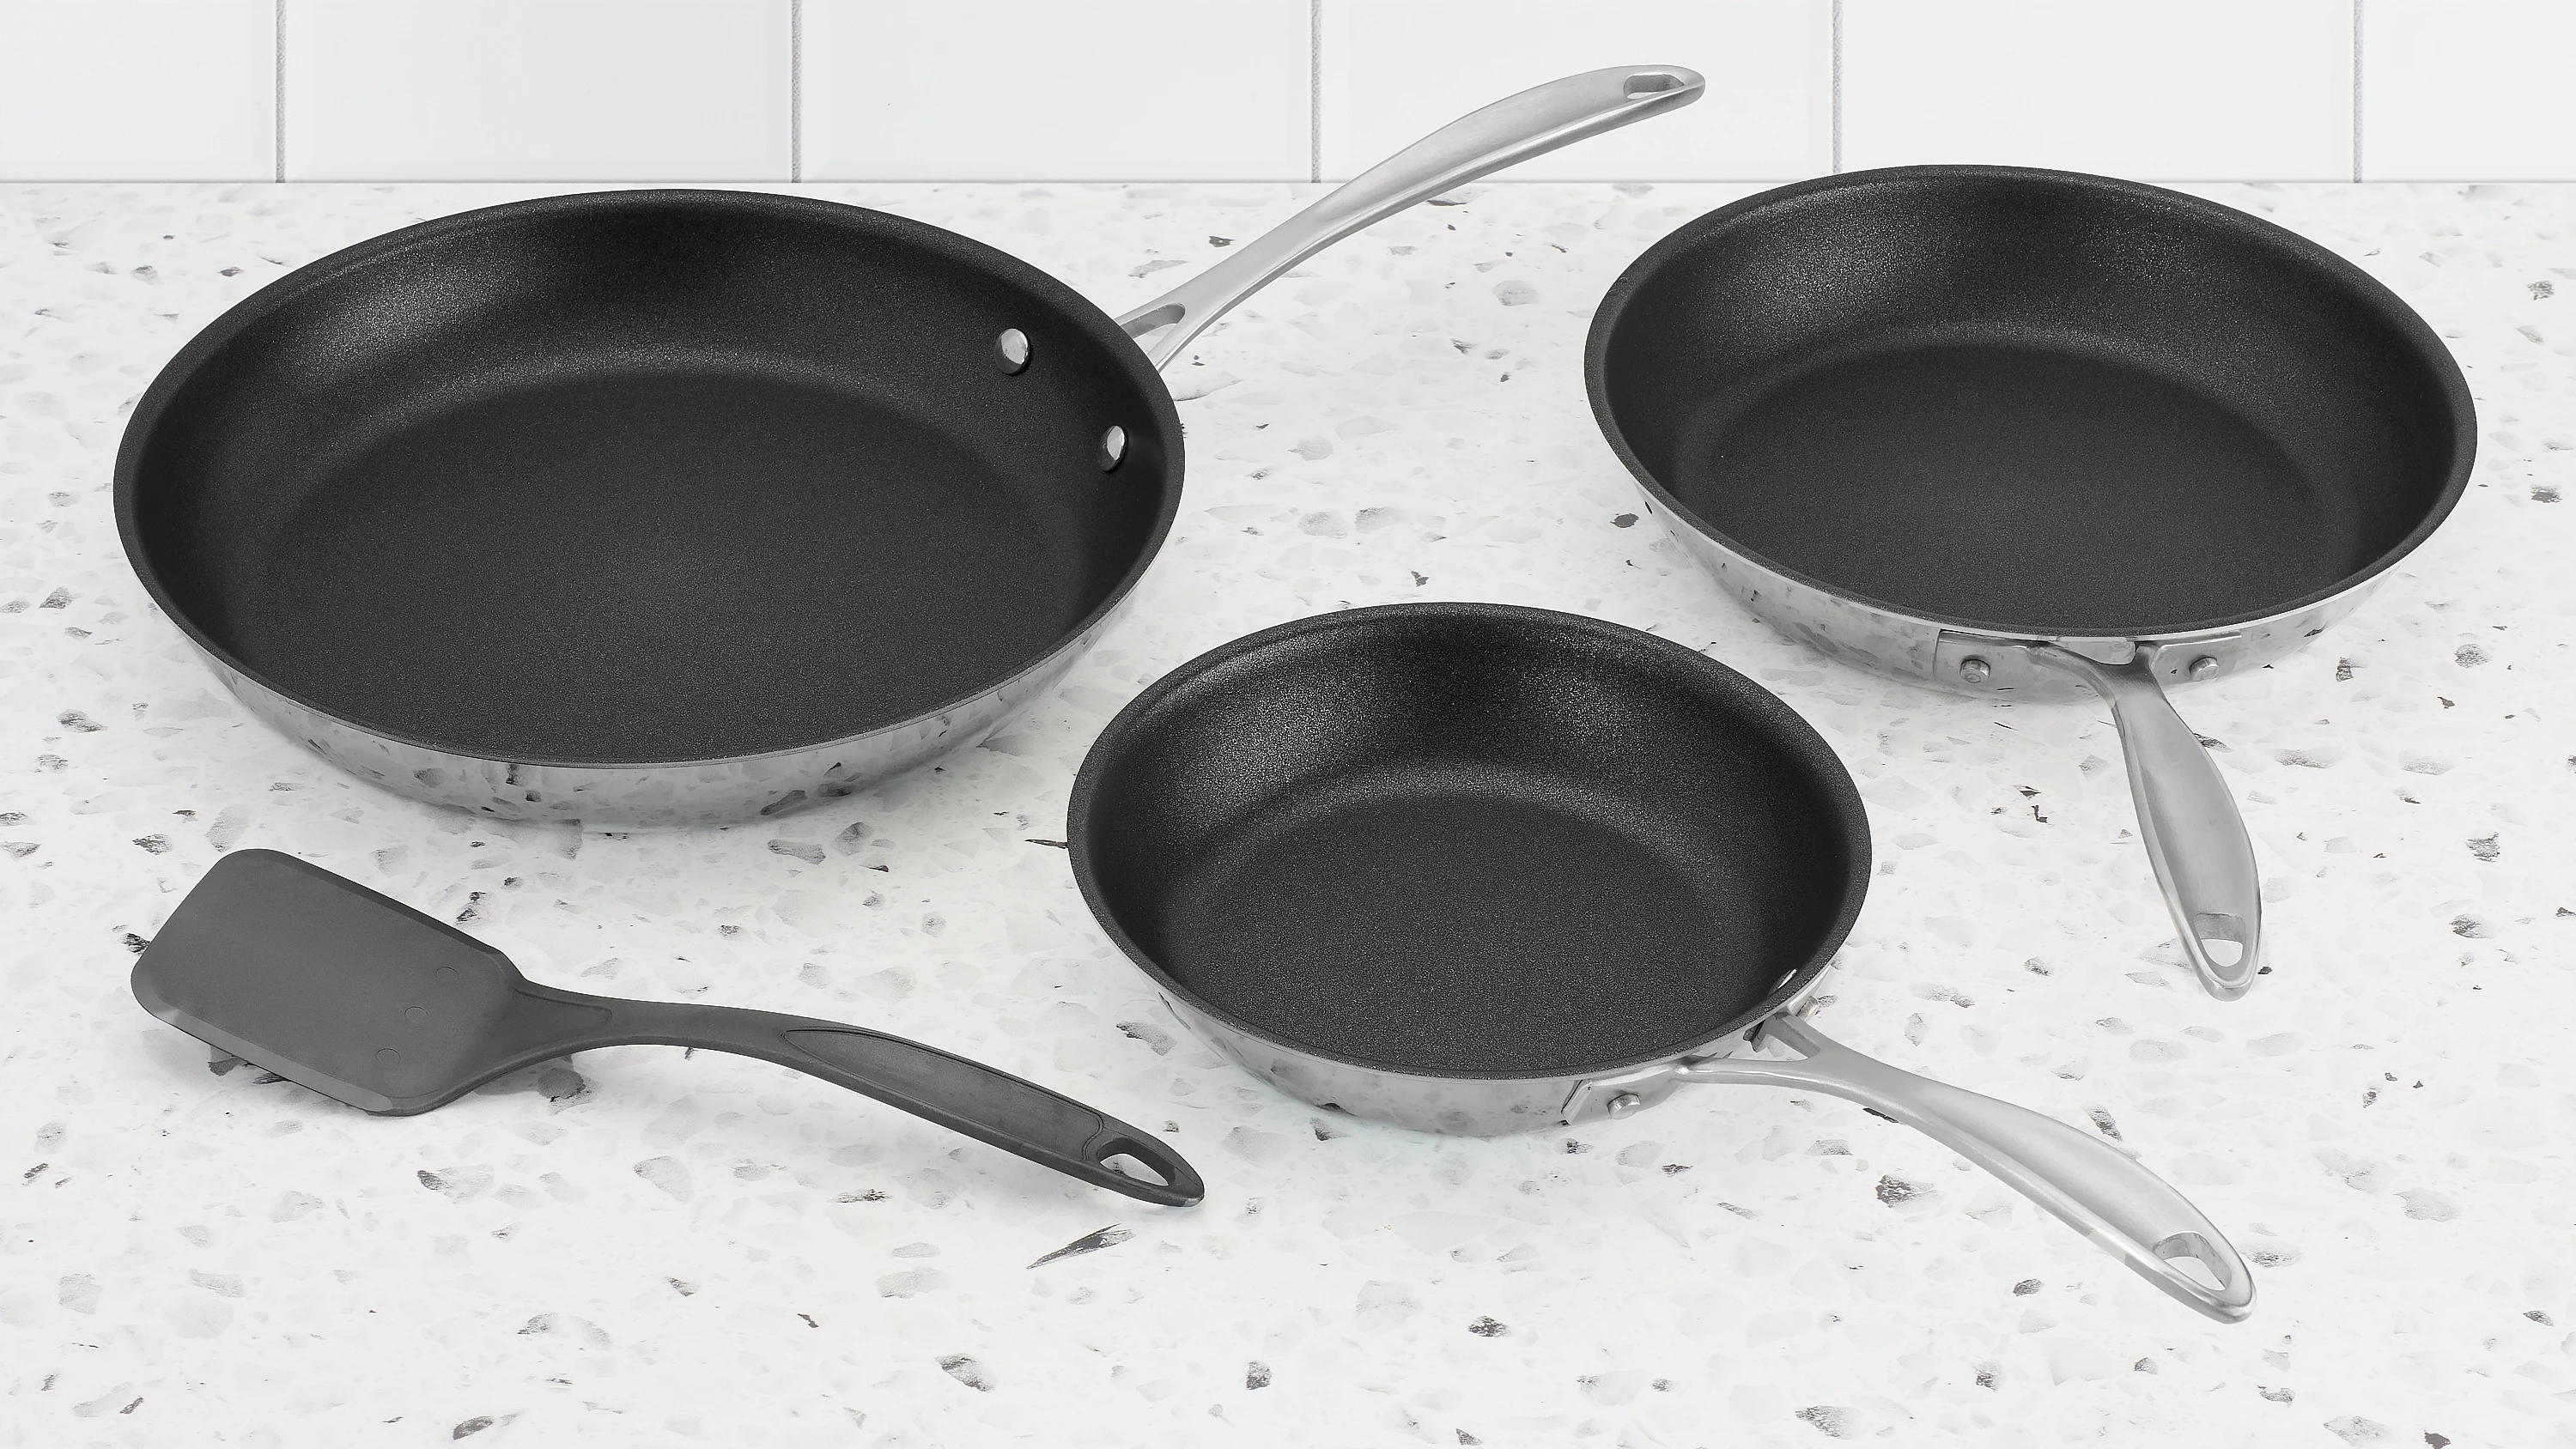  Nonstick Frying Pan Set，3 Piece Pots and Pans Set